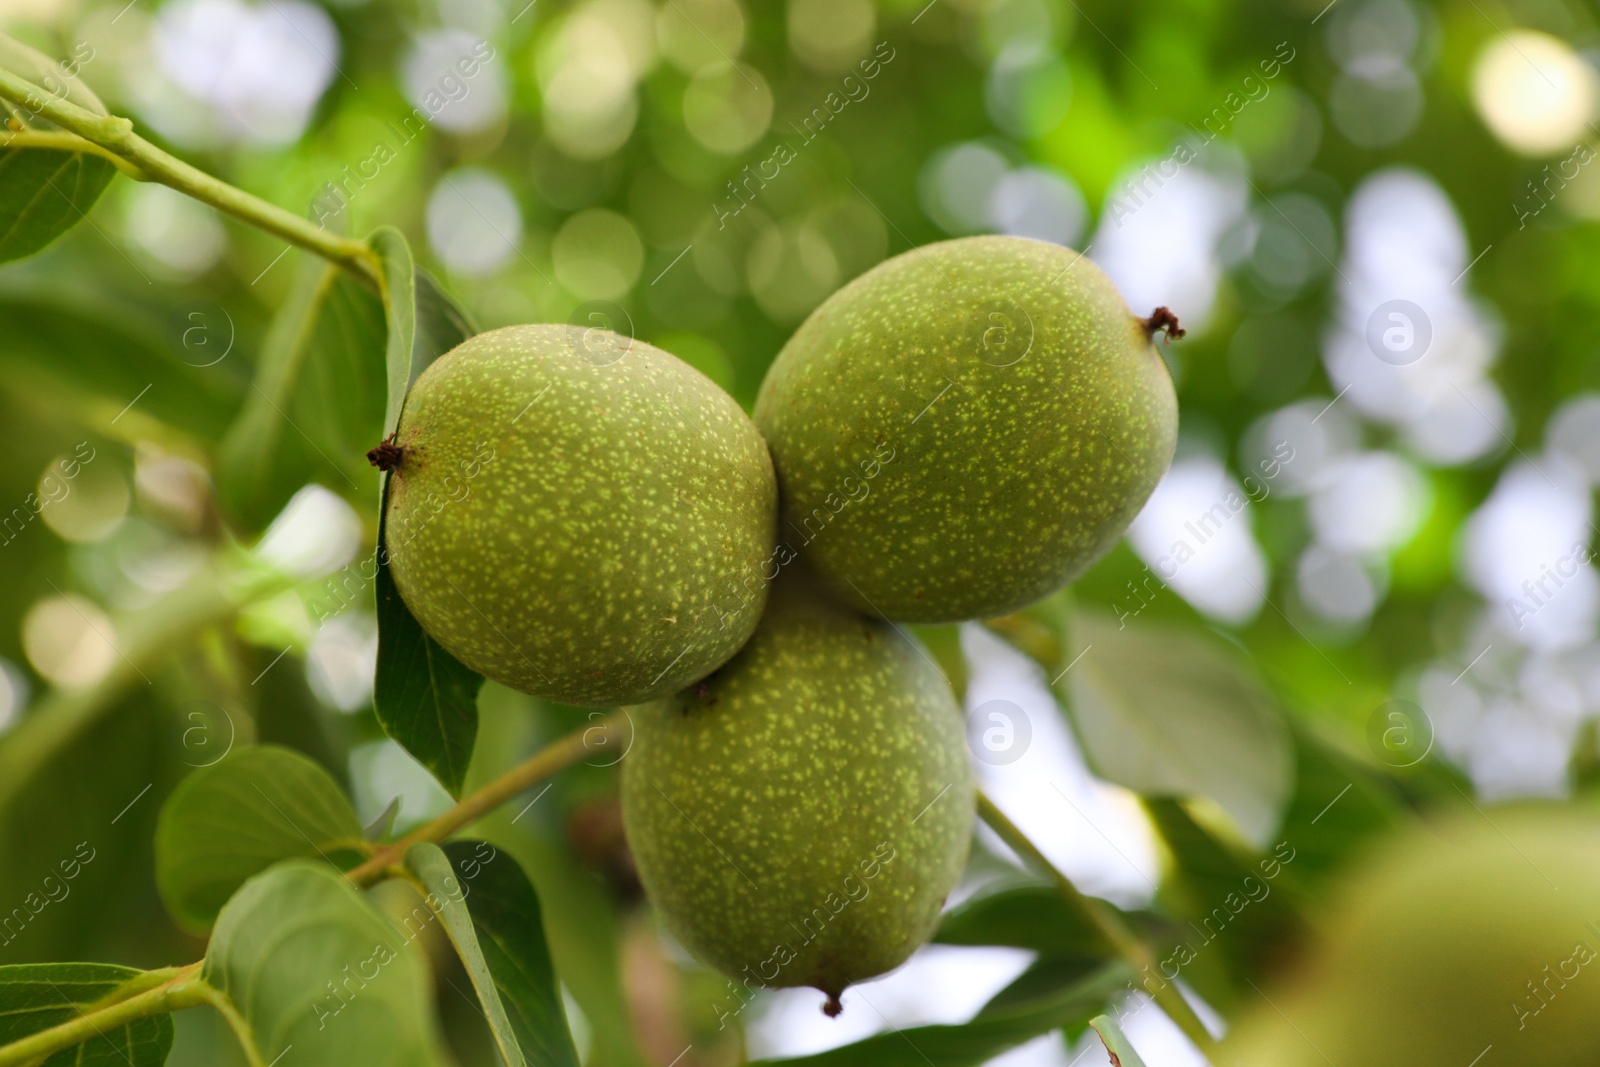 Photo of Green unripe walnuts growing on tree outdoors, closeup